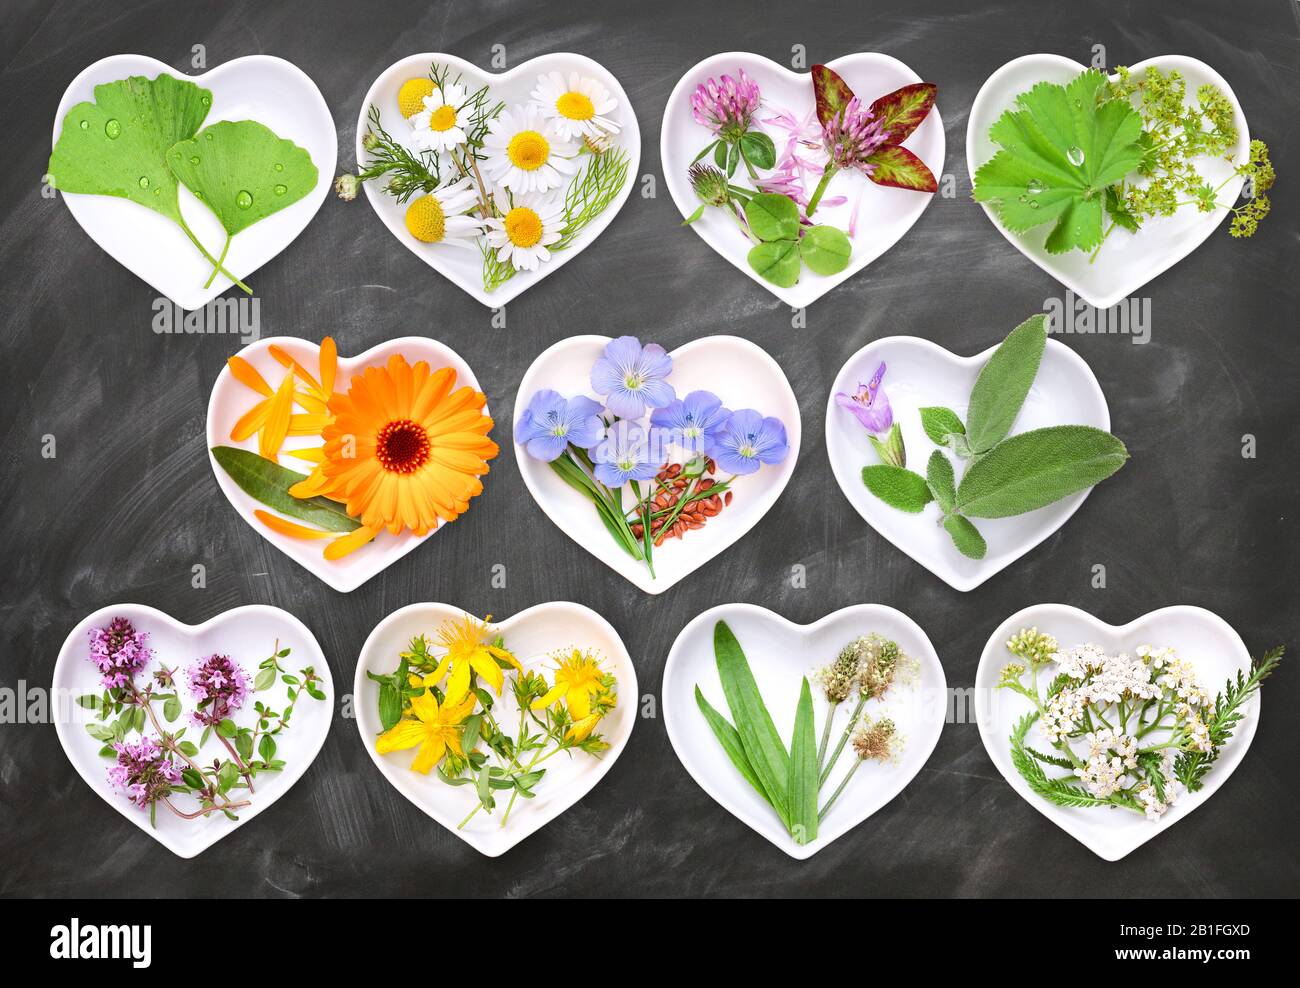 Alternative Medicine with medicinal plants 1 Stock Photo